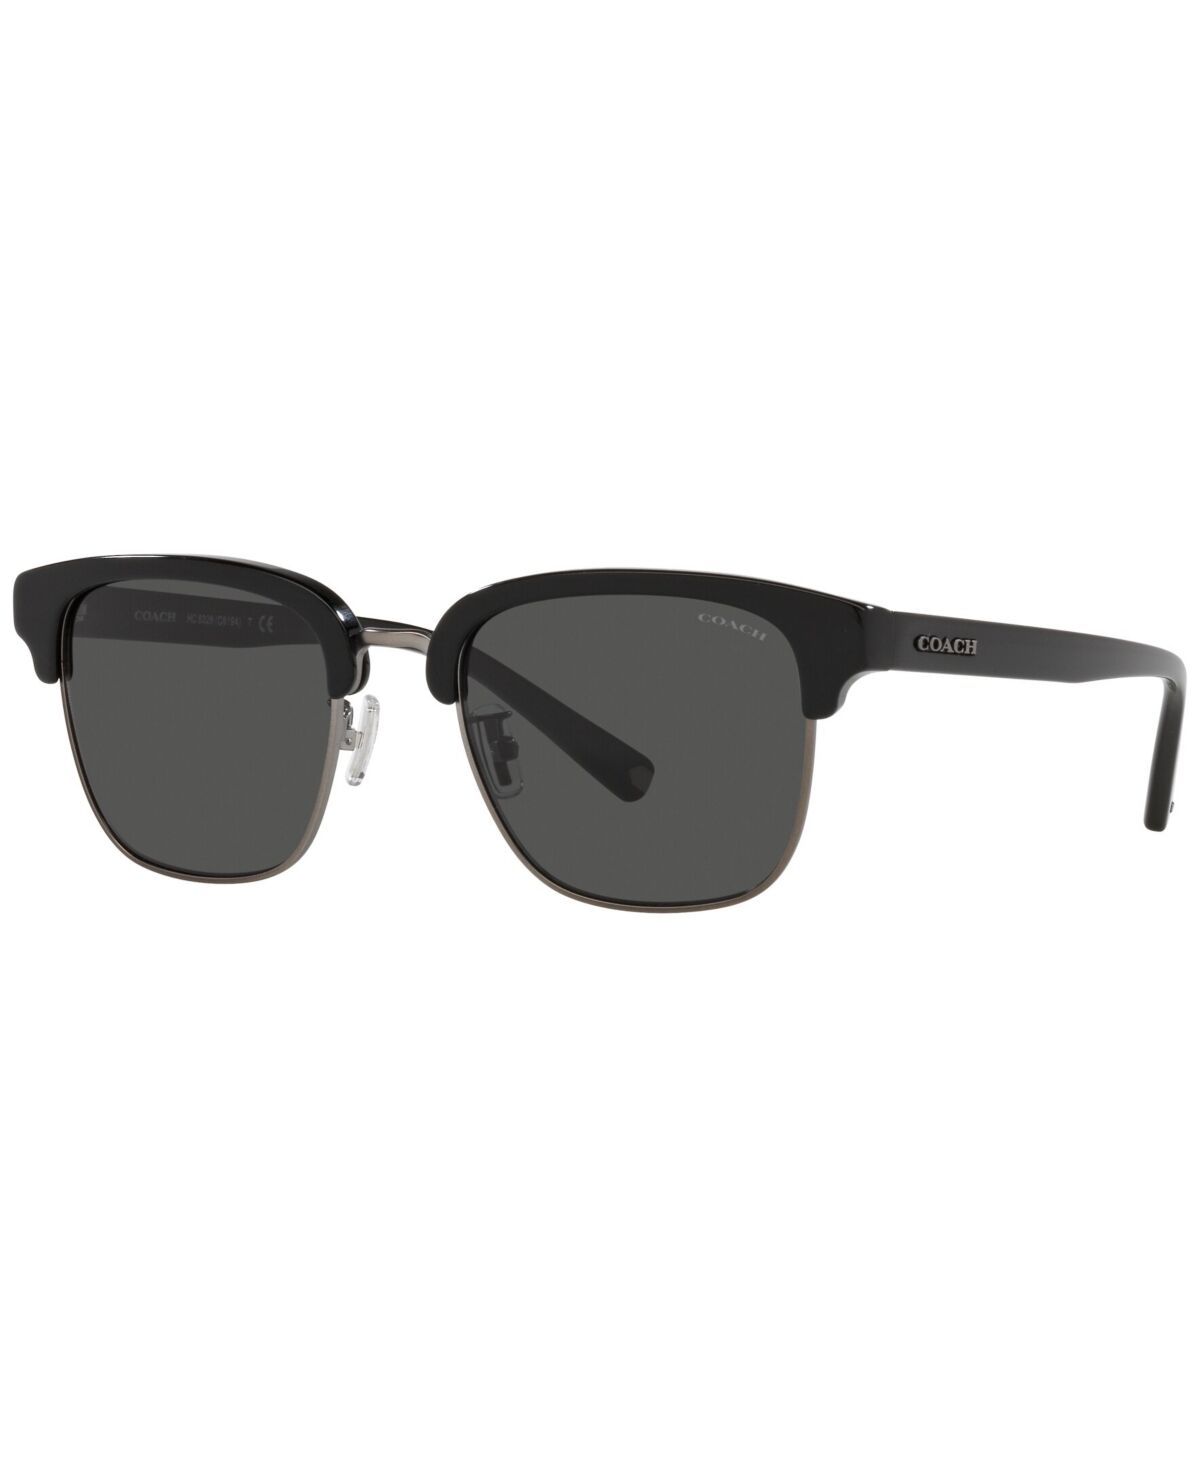 Coach Men's Sunglasses, HC8326 - Black, Gunmetal